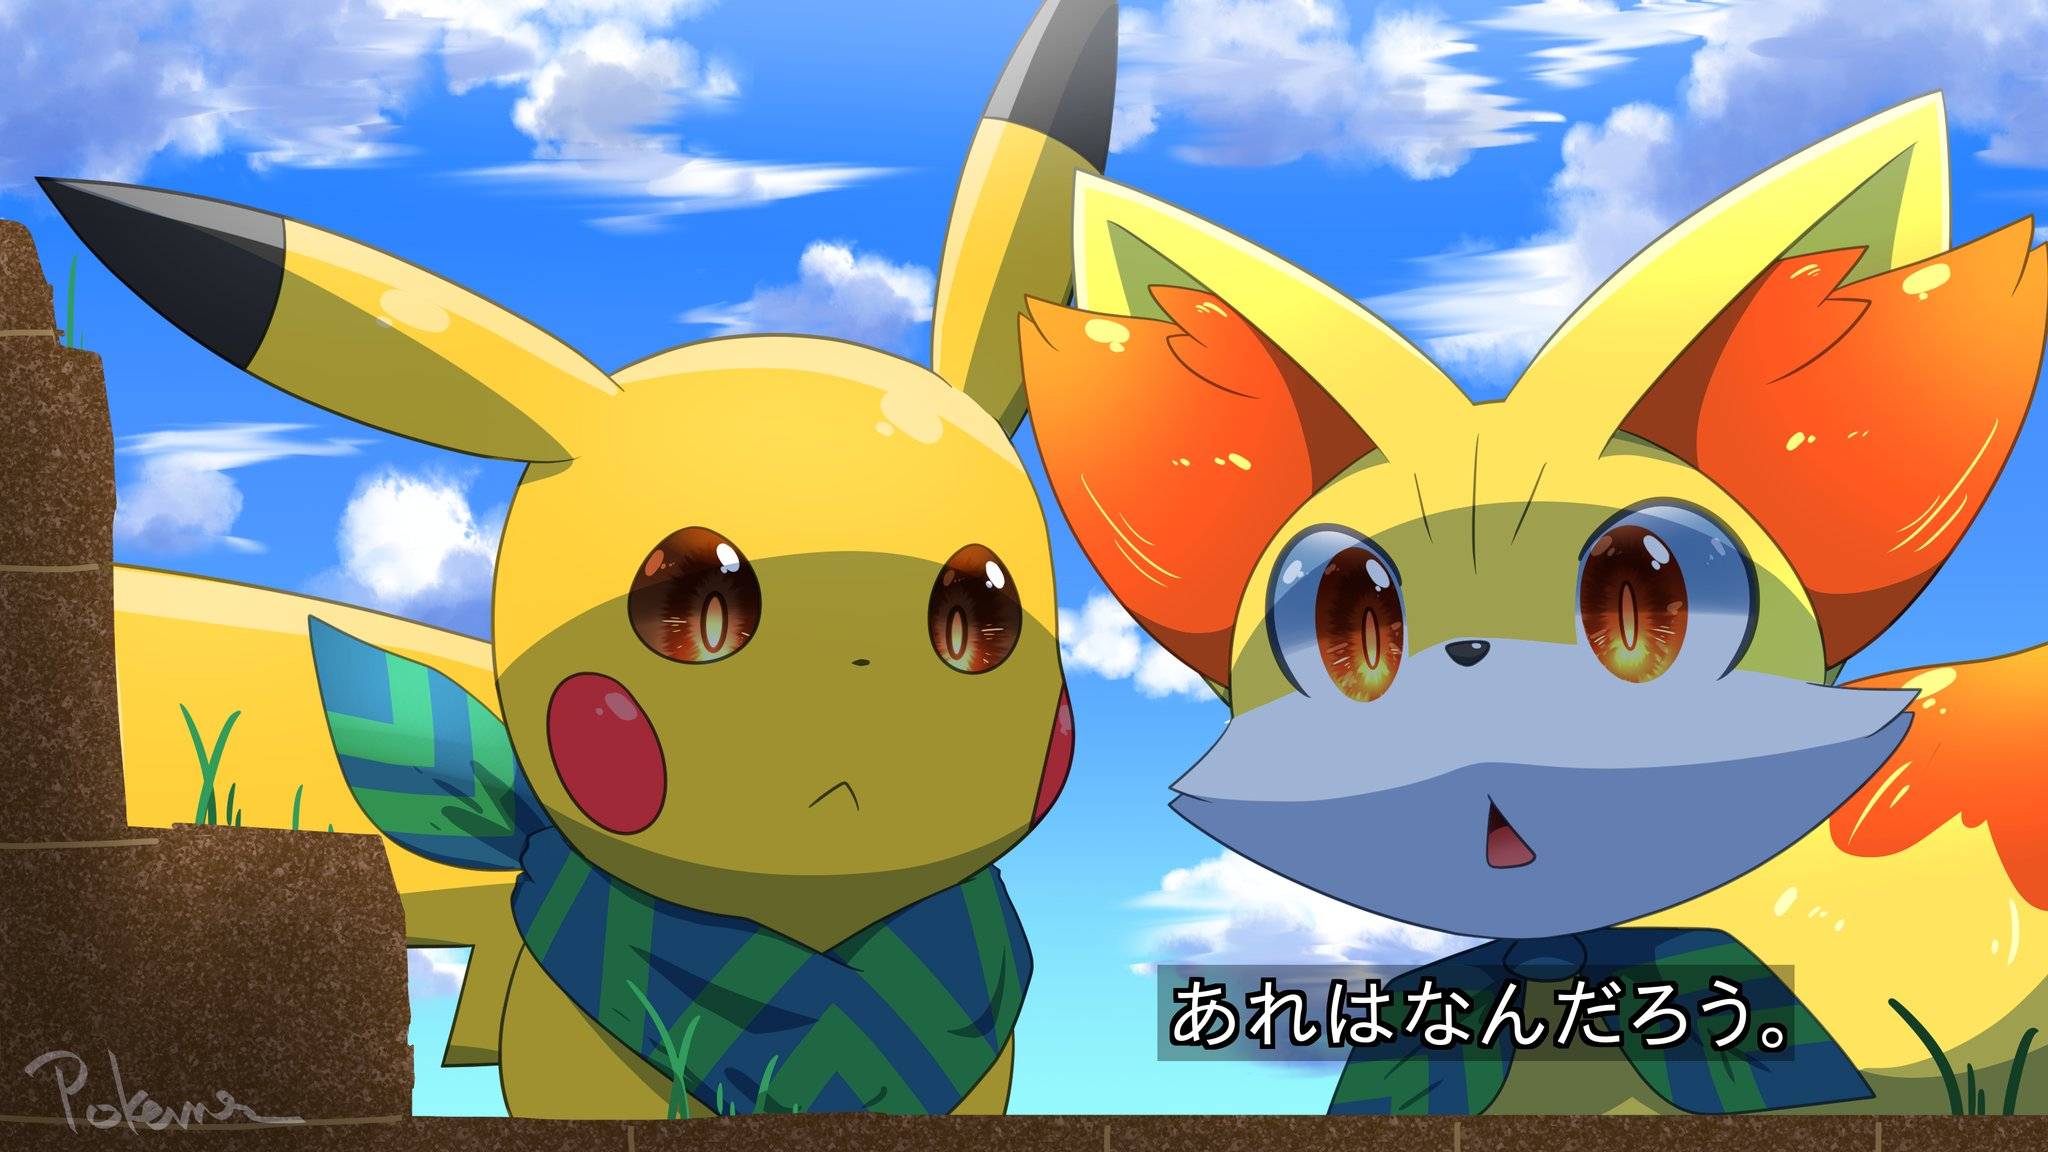 2048x1152 Pikachu y Fennekin | Pokemon, Cute pikachu, Original pokem